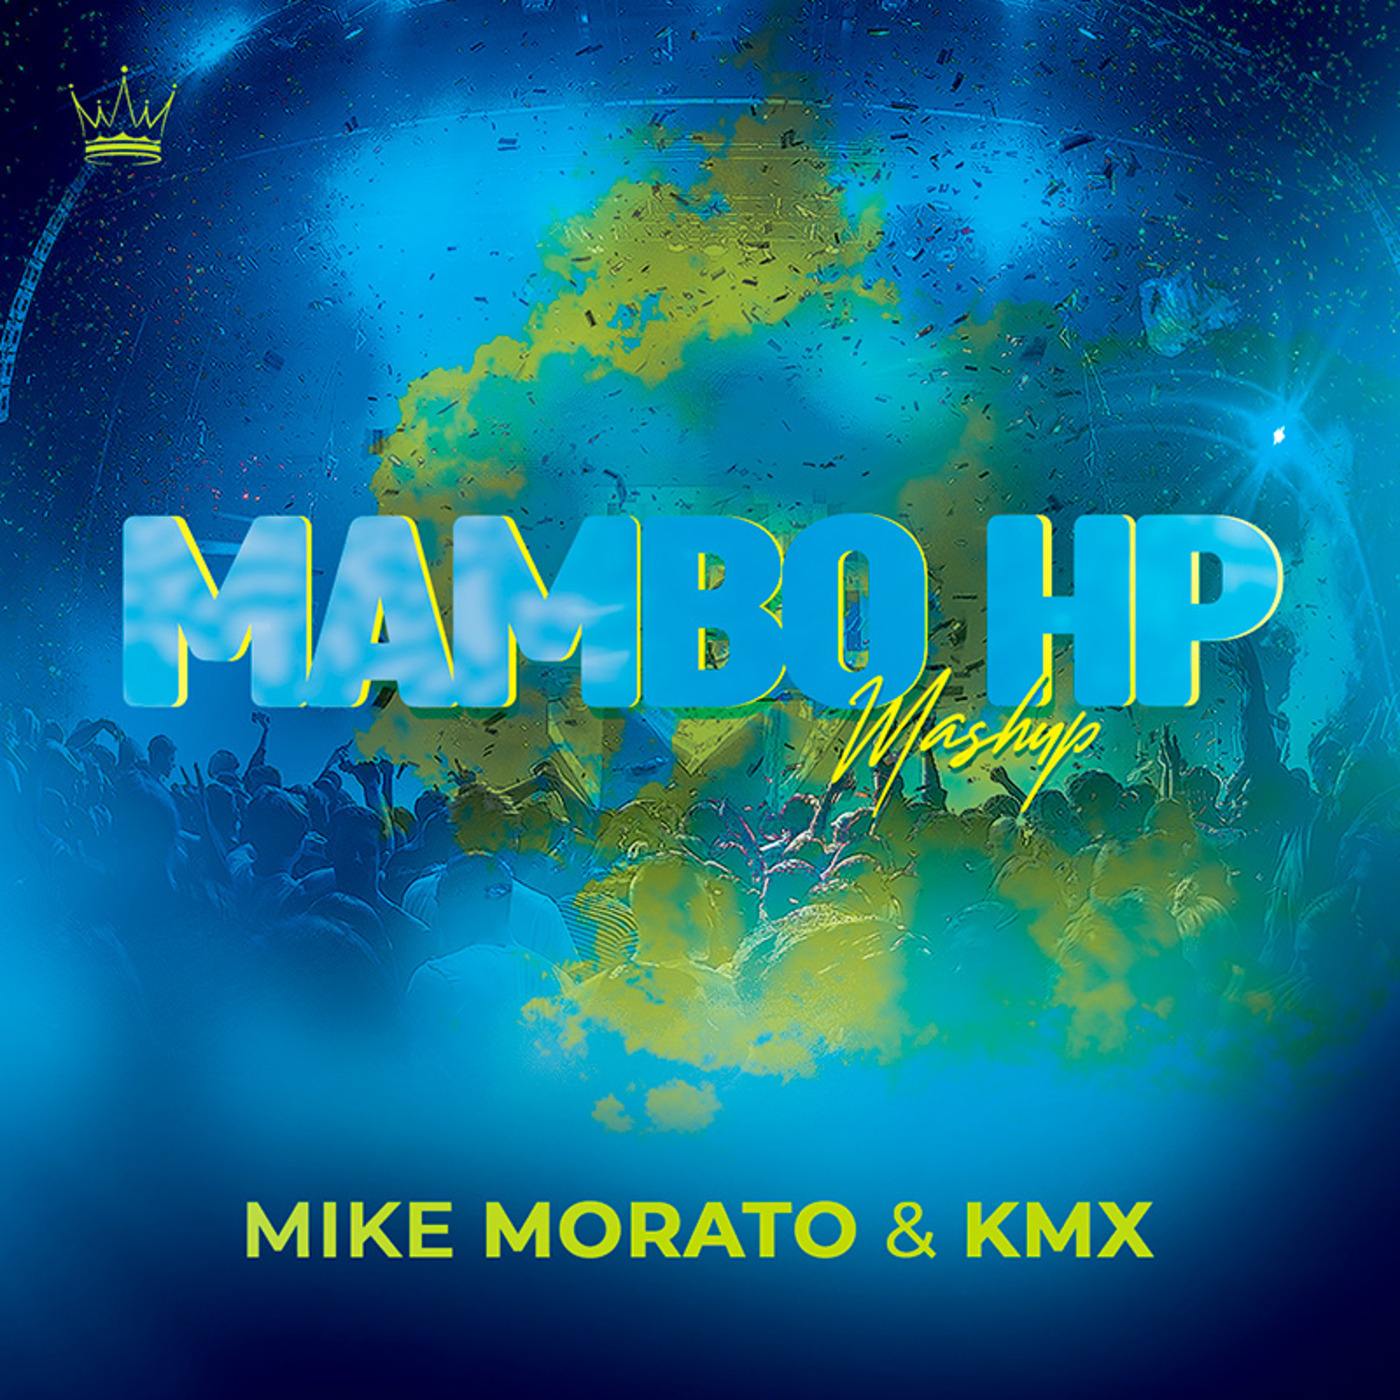 Mike Morato & kMx - Mambo HP (Mashup)